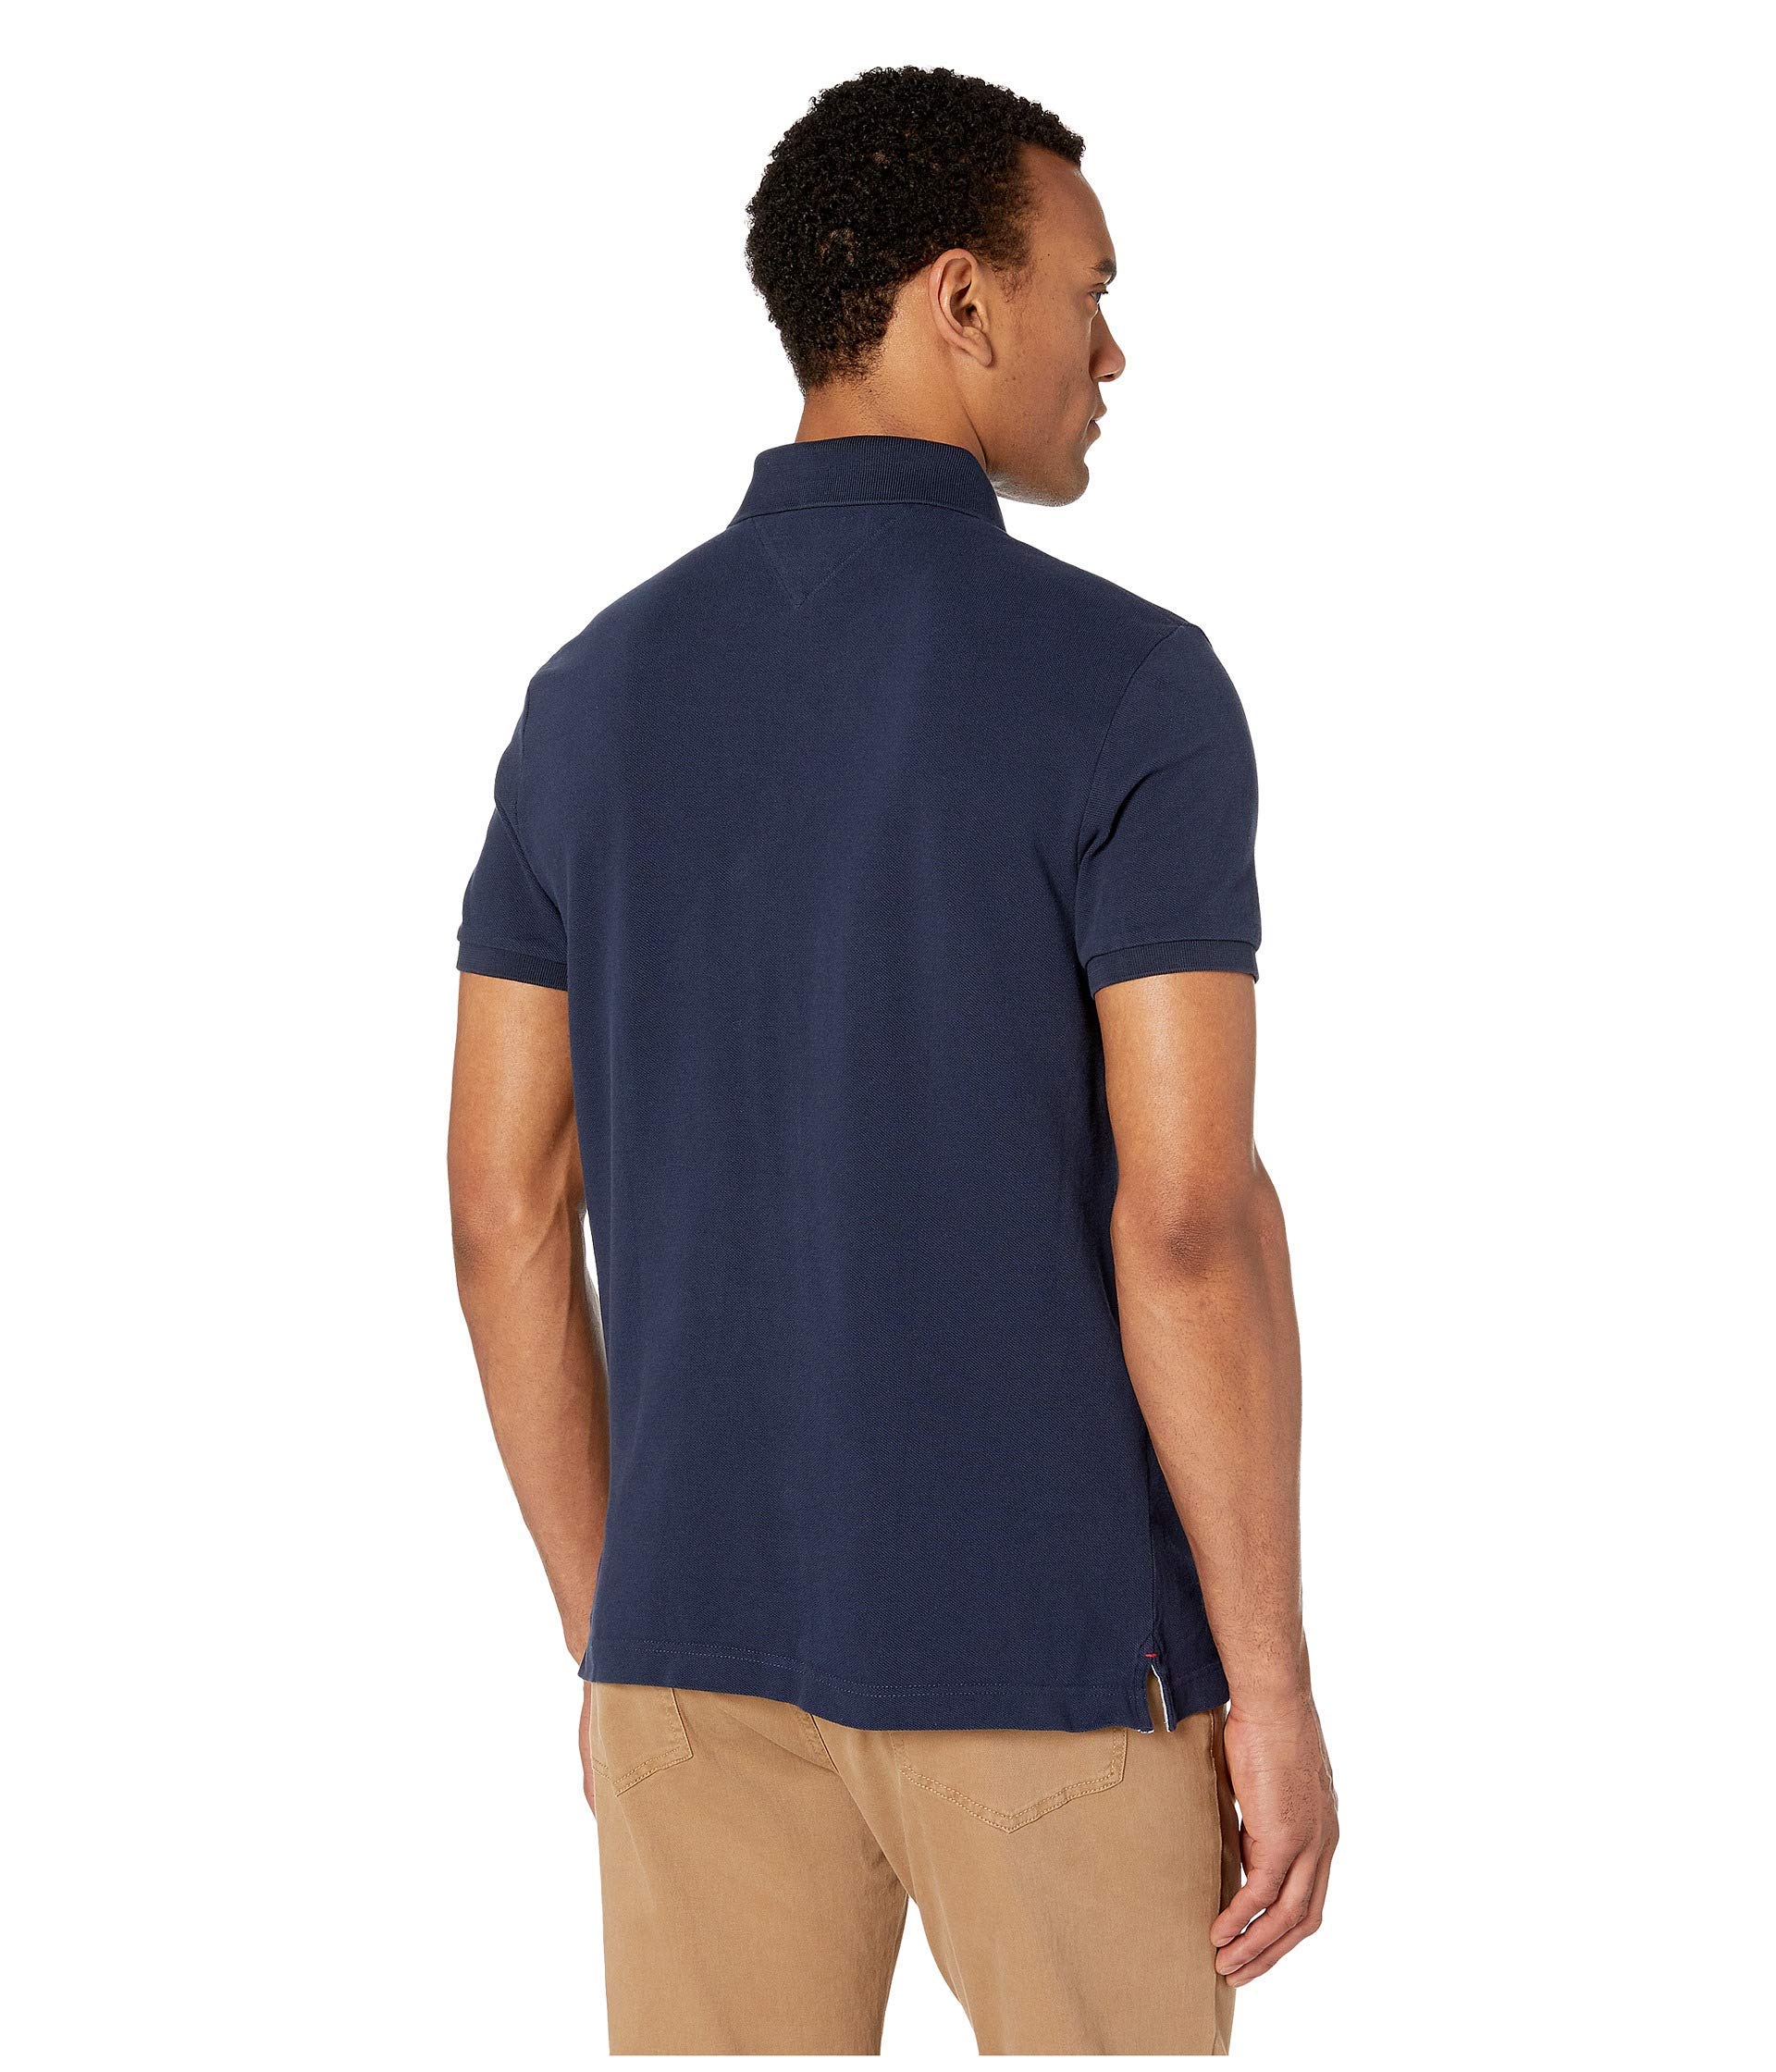 Tommy Hilfiger Men's Short Sleeve Cotton Pique Polo Shirt in Regular Fit